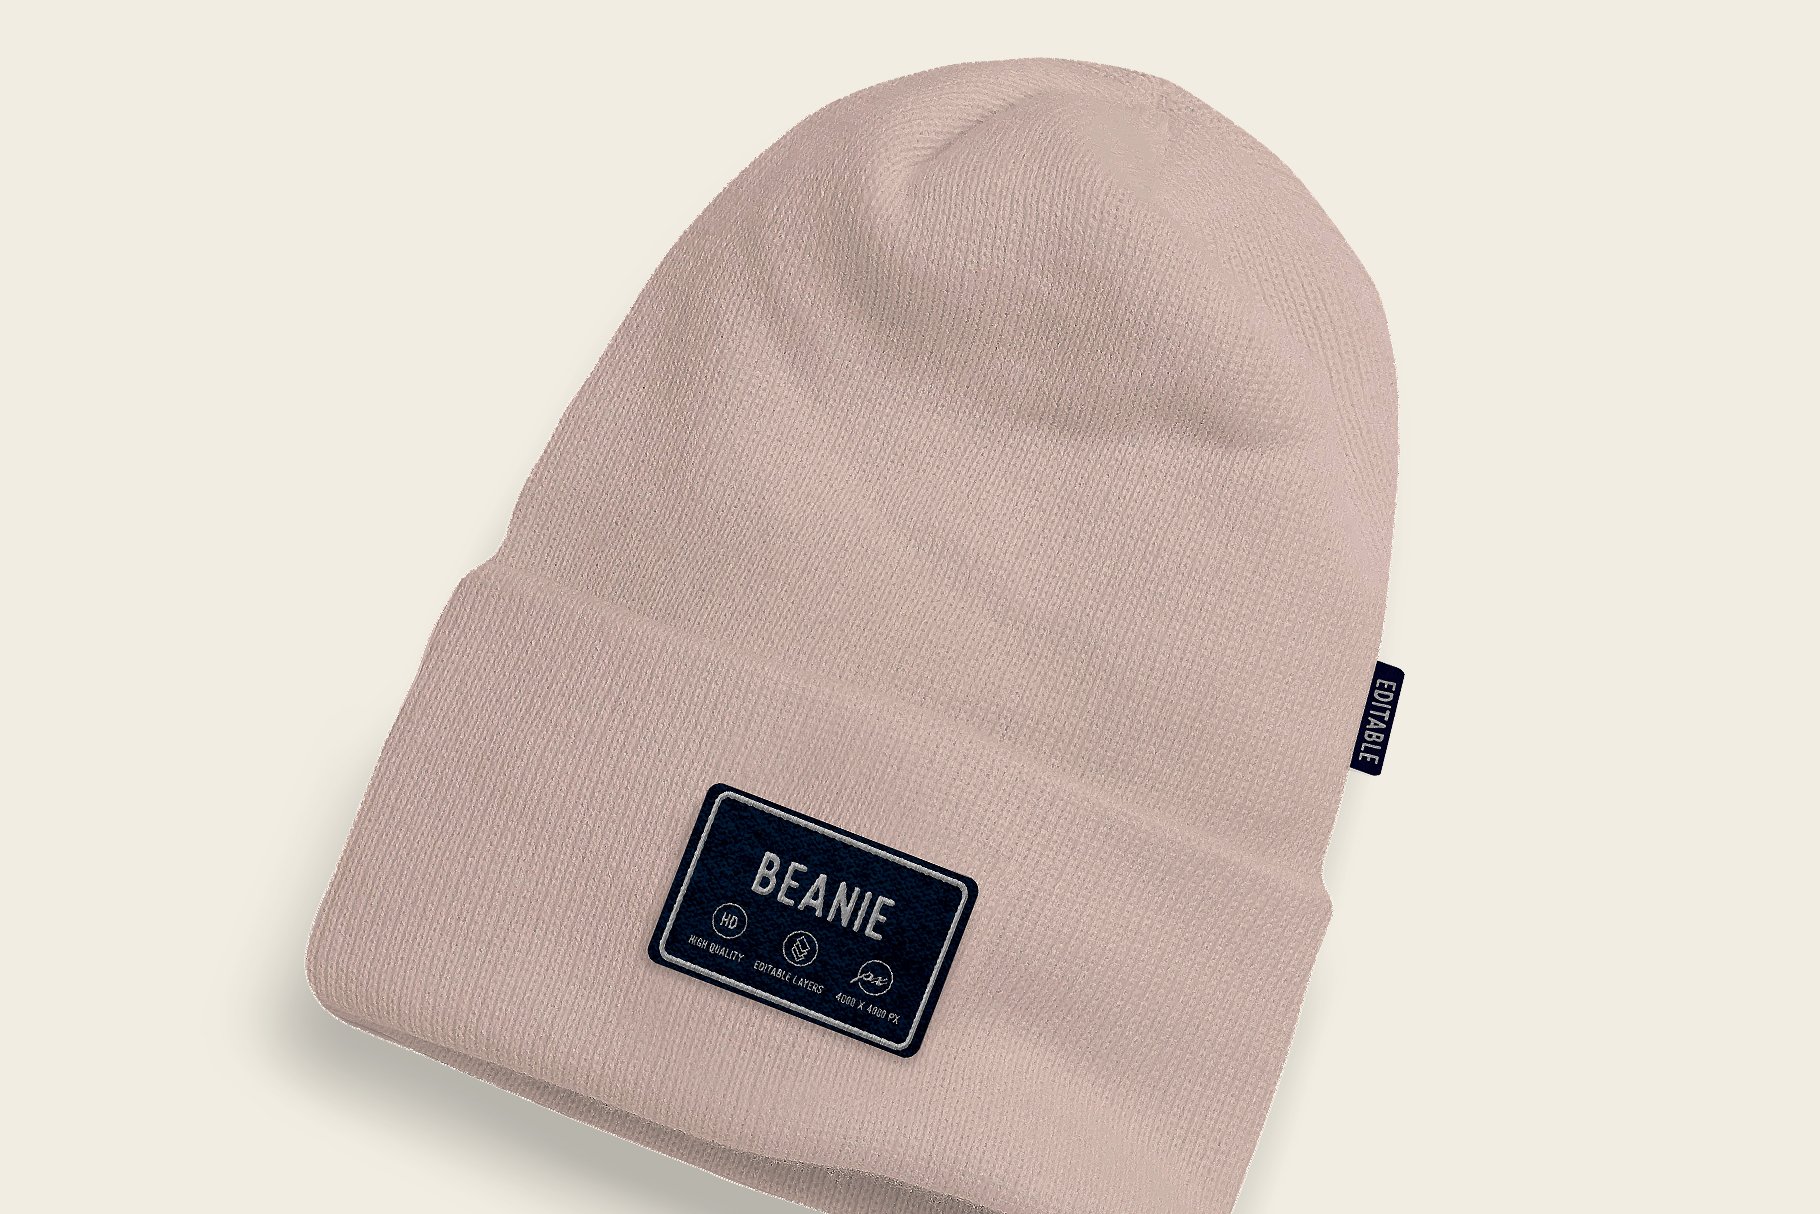 beanie mockup branding apparel fashion winter wear mock up easy editable design tag label patch hat snow woollen pink 965